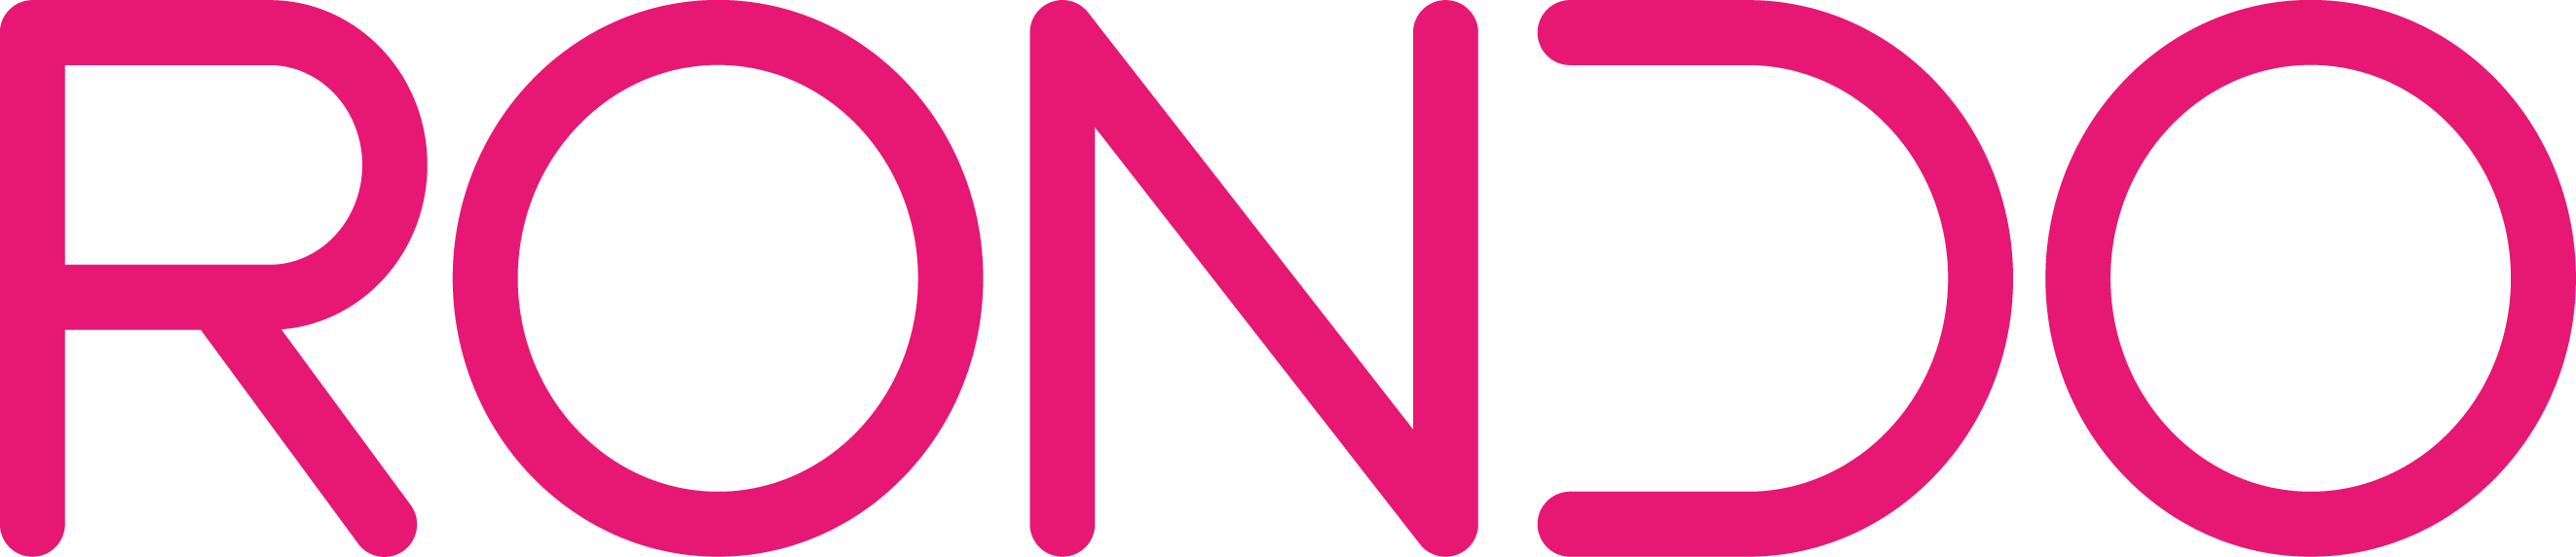 Screenskills-logo